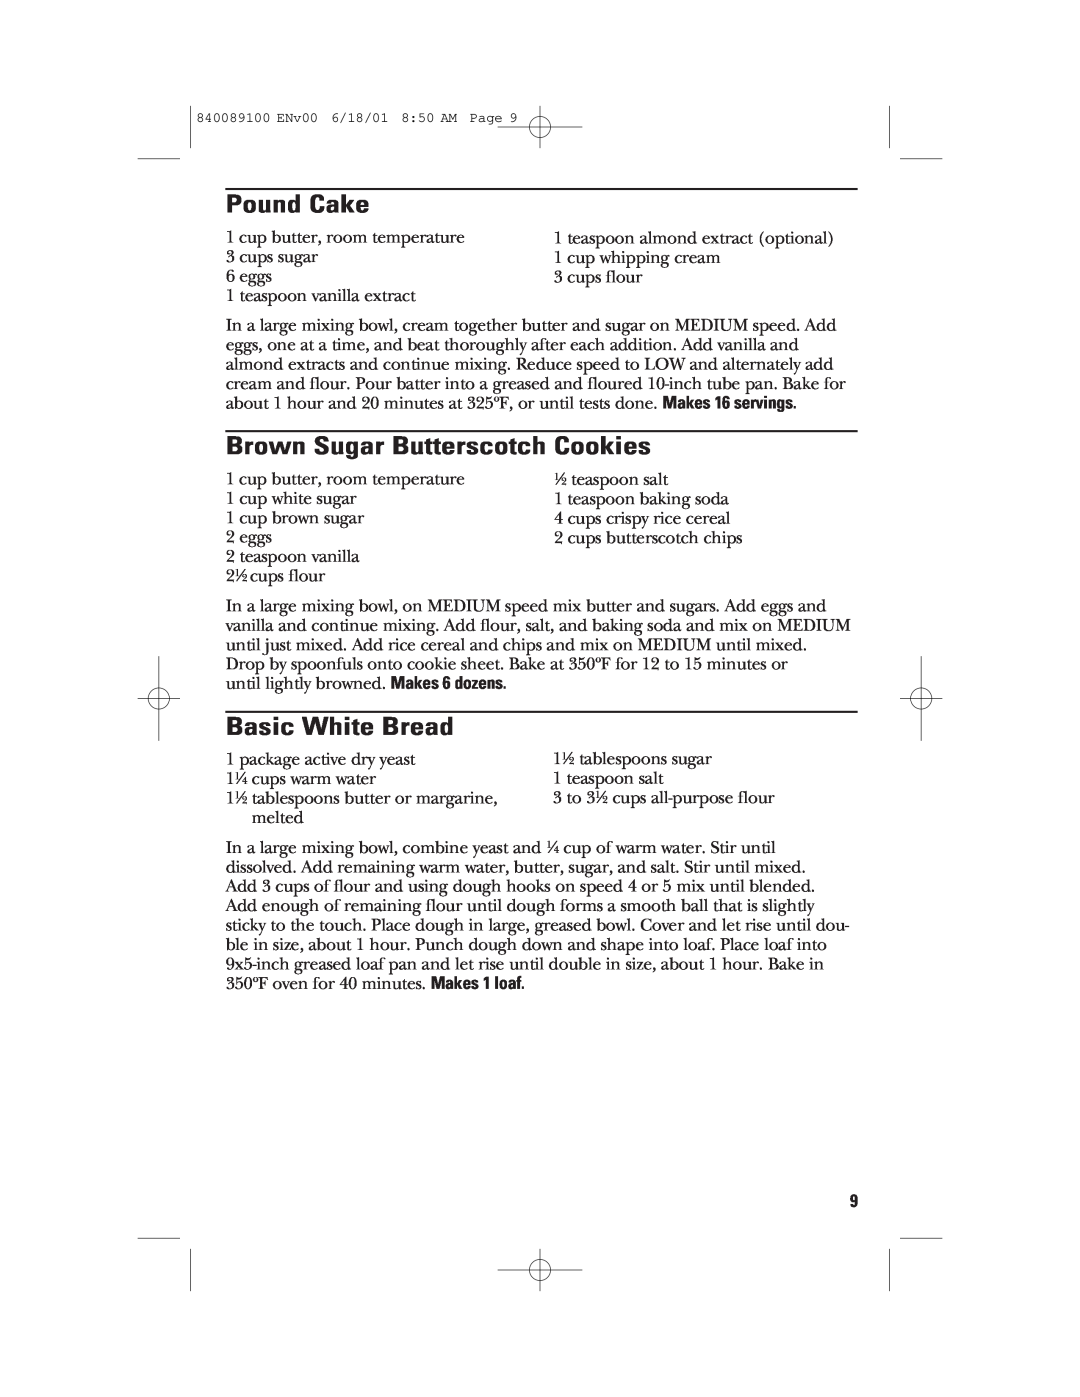 GE 840089100 manual Pound Cake, Brown Sugar Butterscotch Cookies, Basic White Bread 